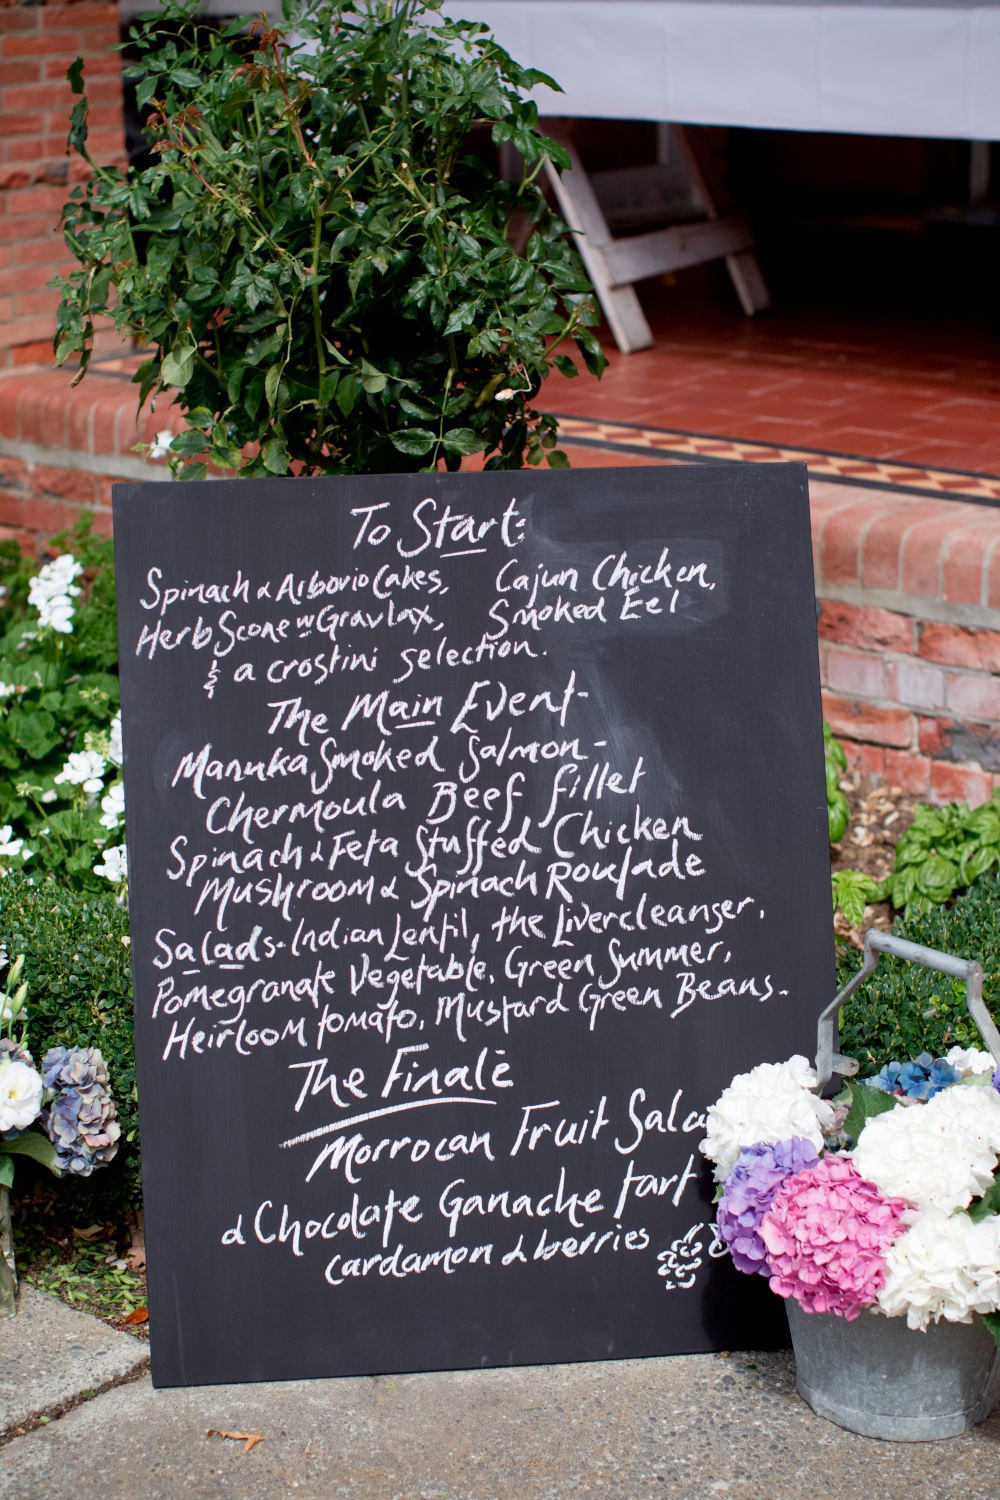 A chalk menu board set among flowers outside